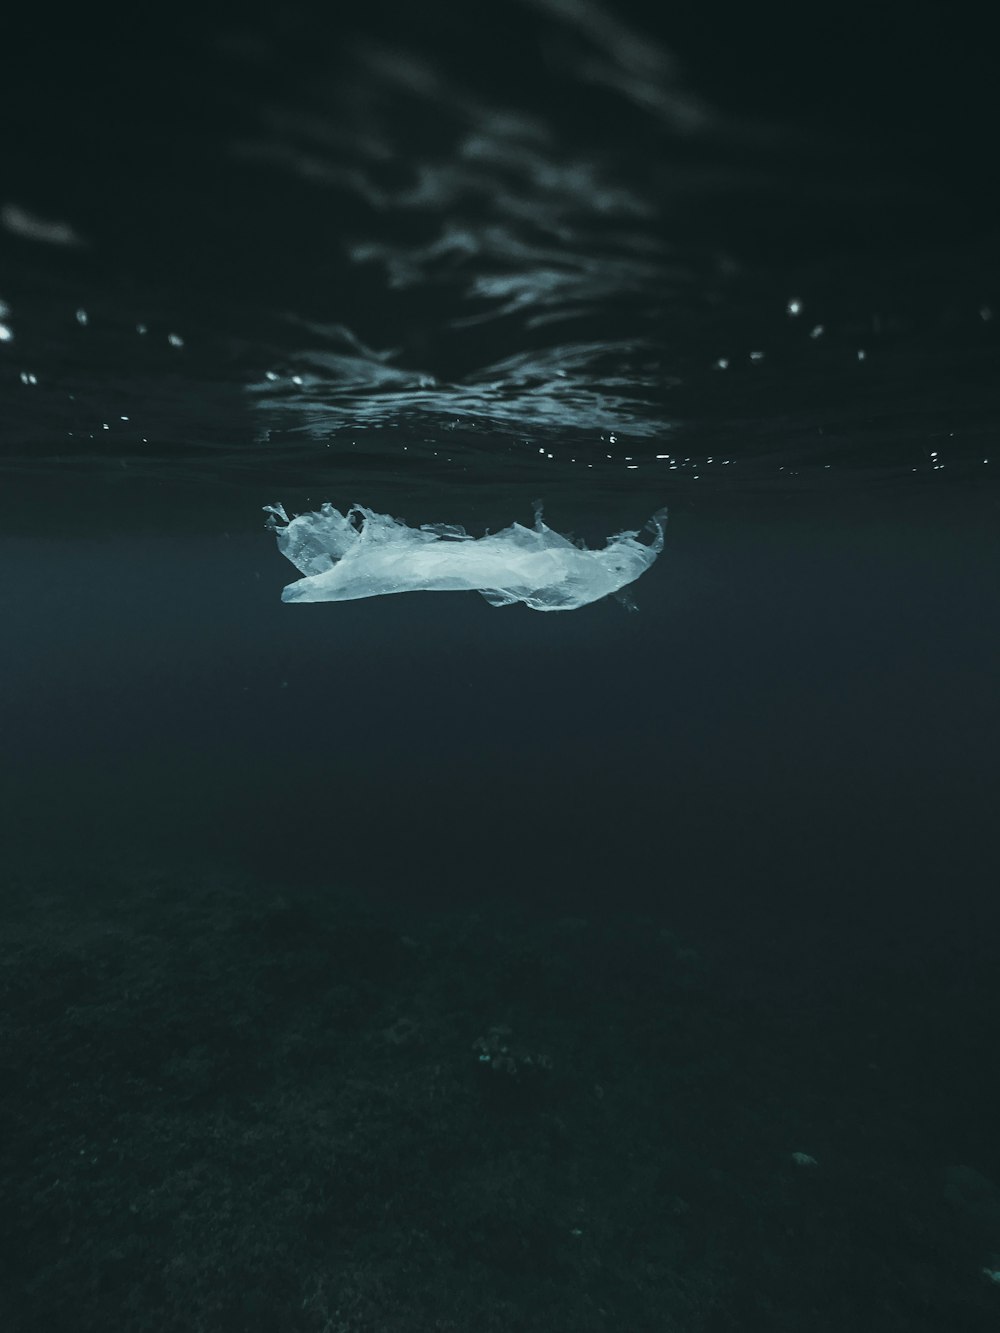 femme en robe blanche dans l’eau